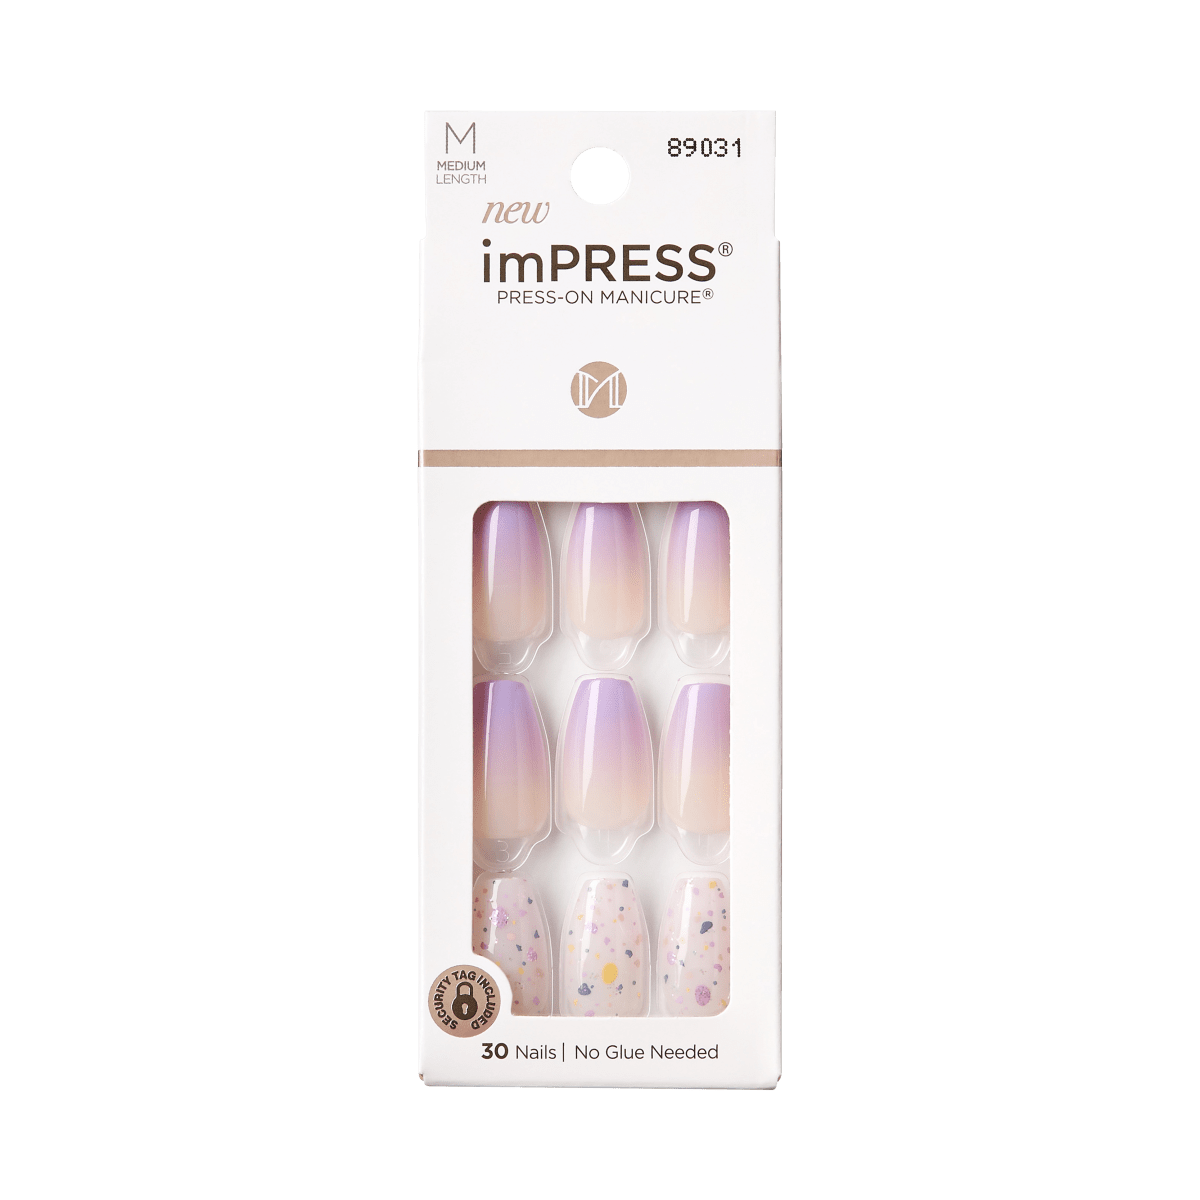 imPRESS Press-On Manicure - All I Want